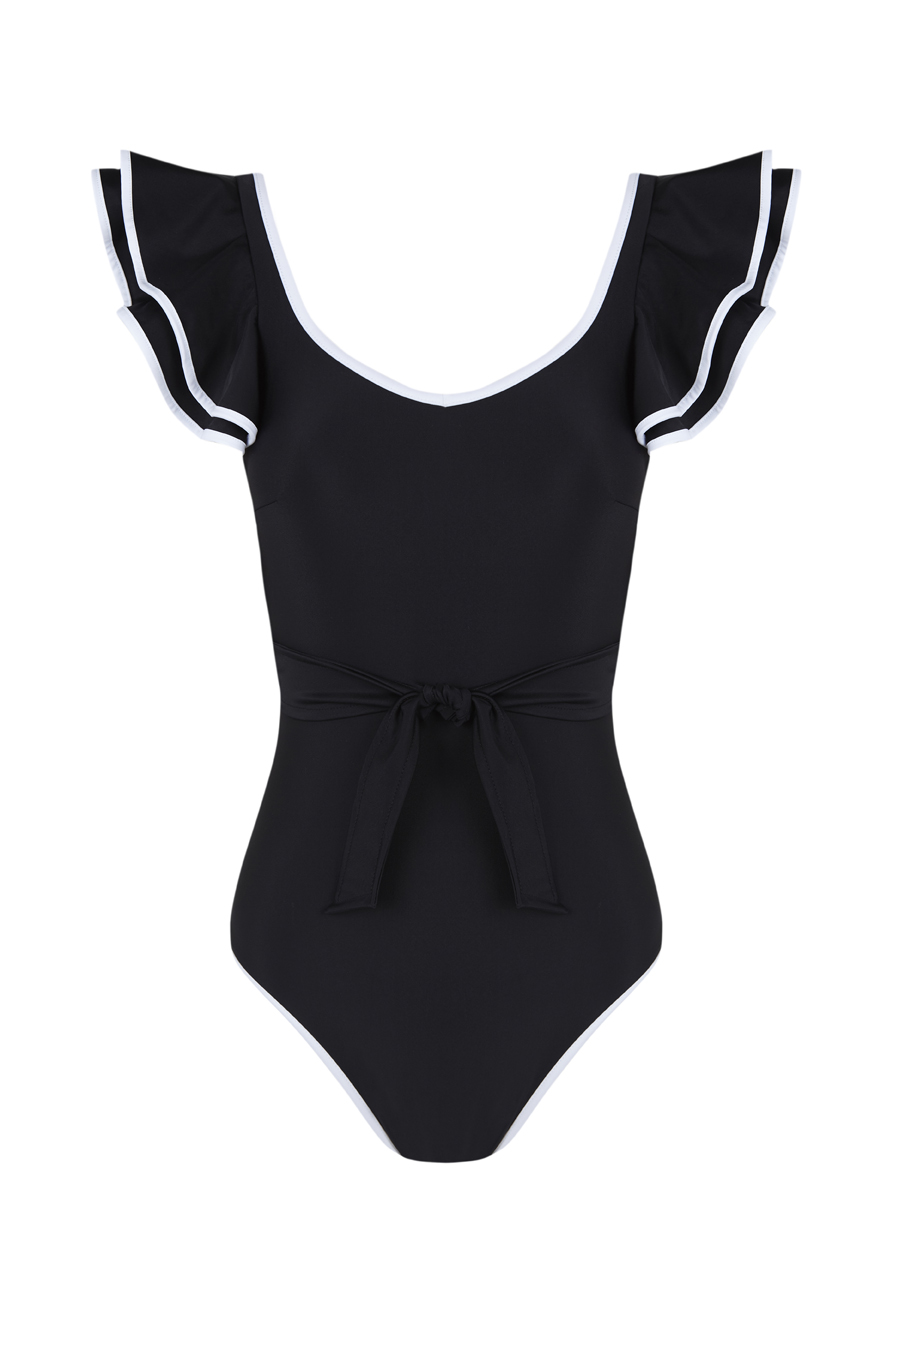 Swimsuit Anastazja O / C3 - one-piece push up swimsuit 2023